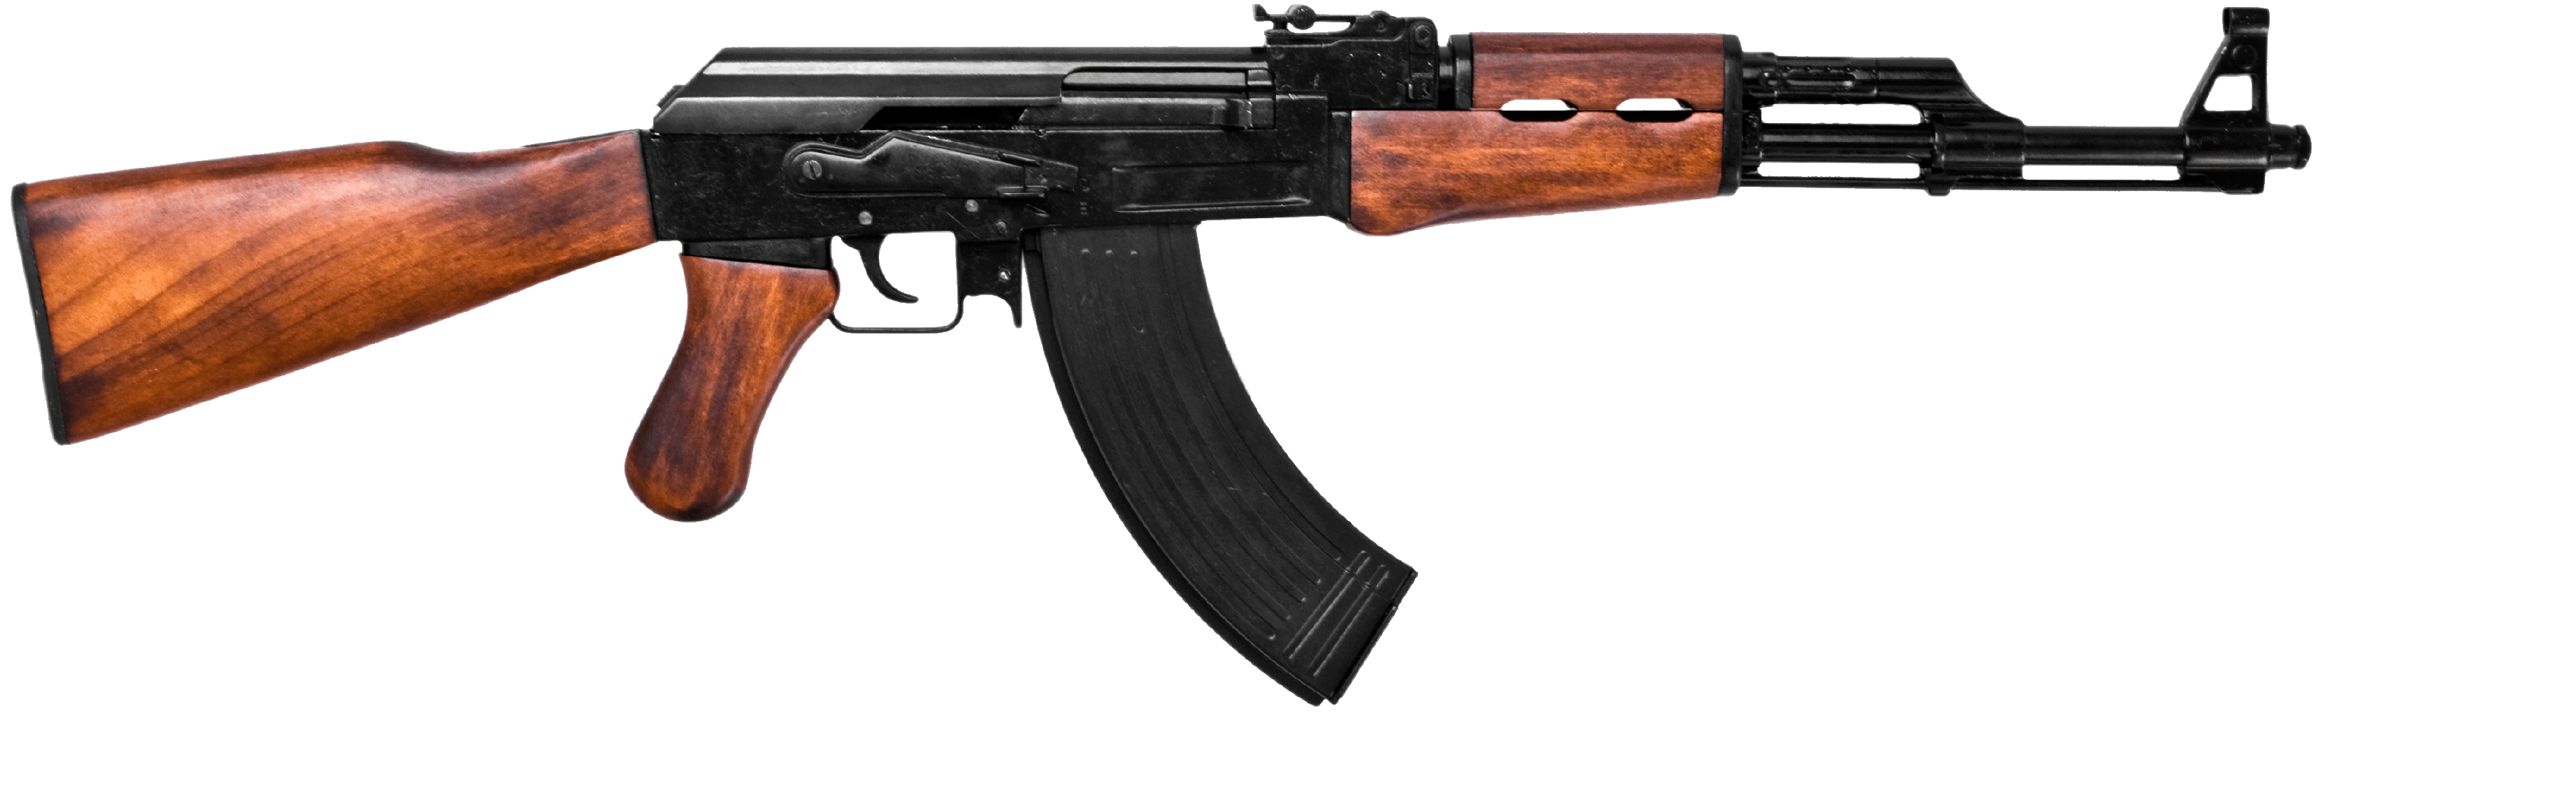 Ak 47 Kalash Russian Assault Rifle Png Png Image - Rifle, Transparent background PNG HD thumbnail